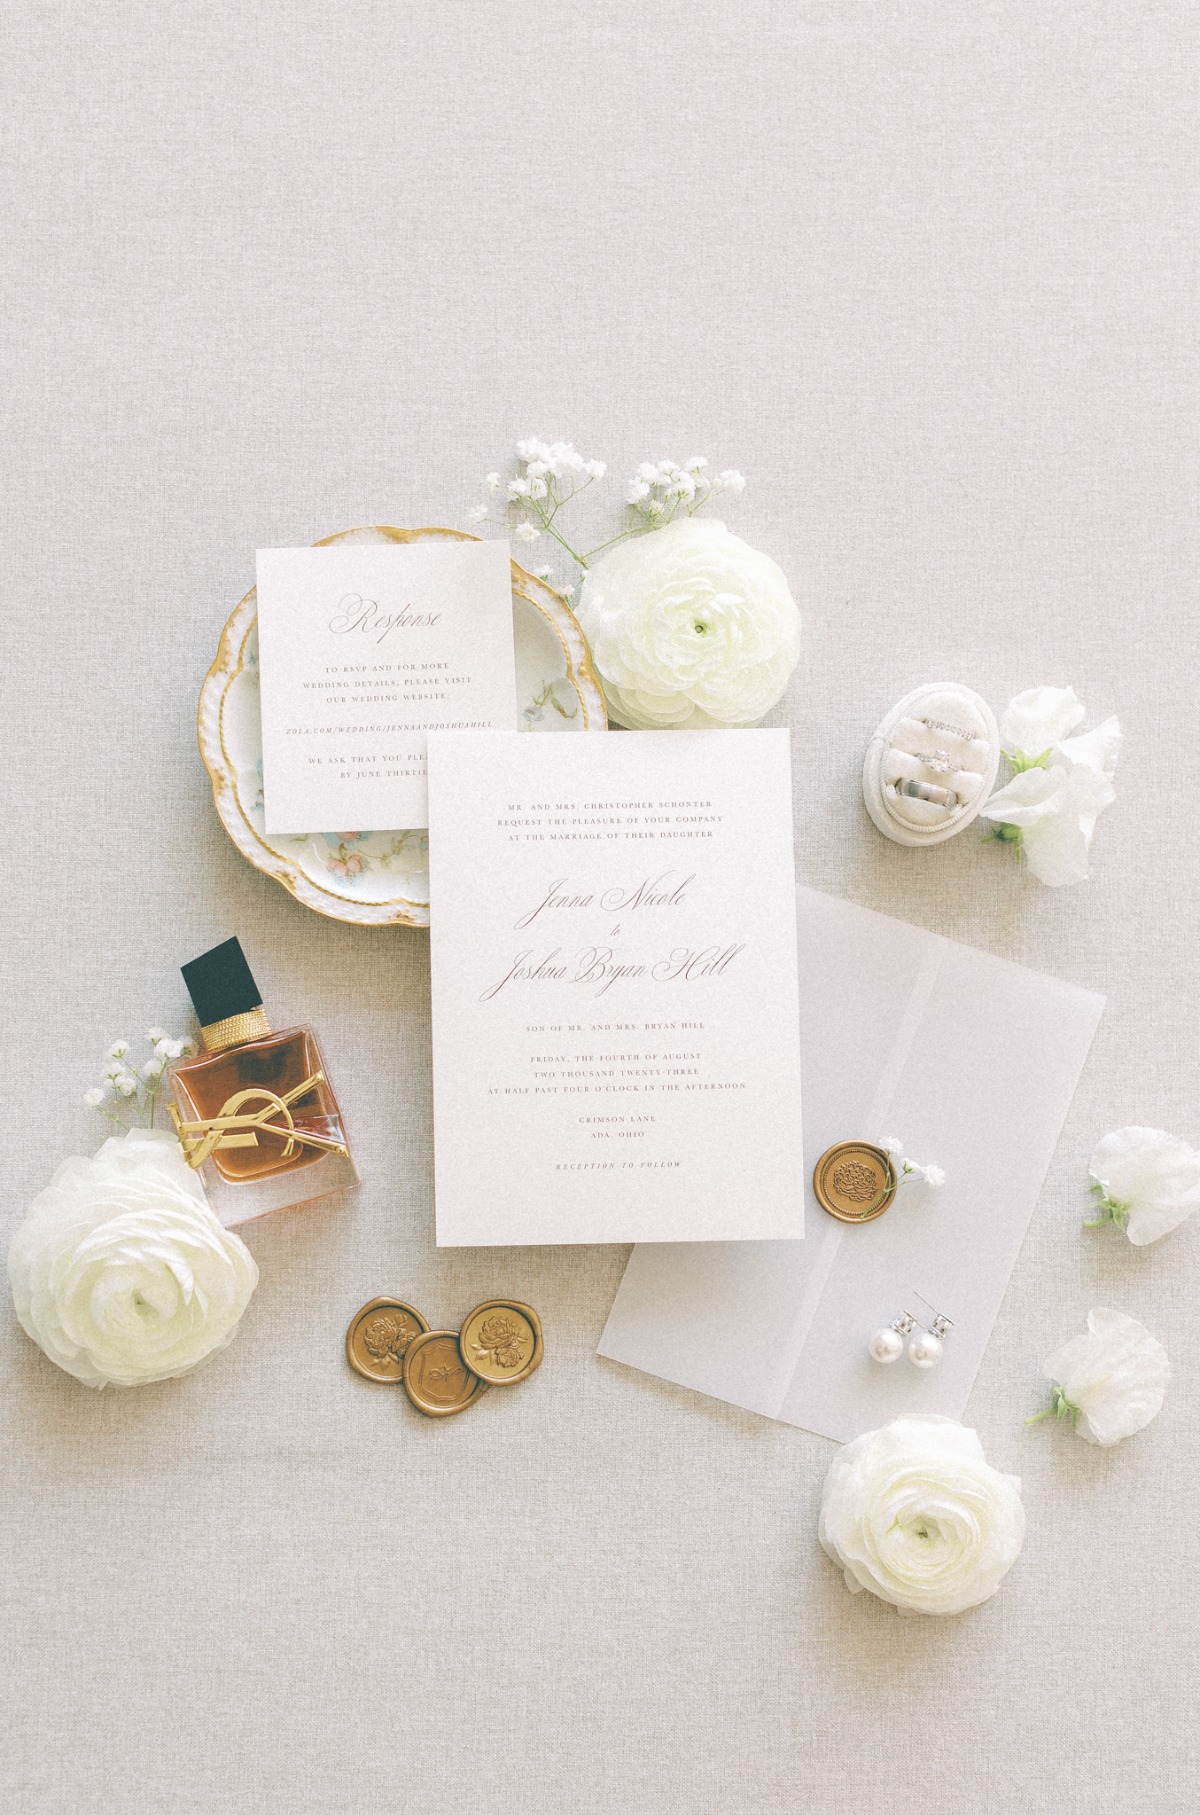 black-tie wedding invitations